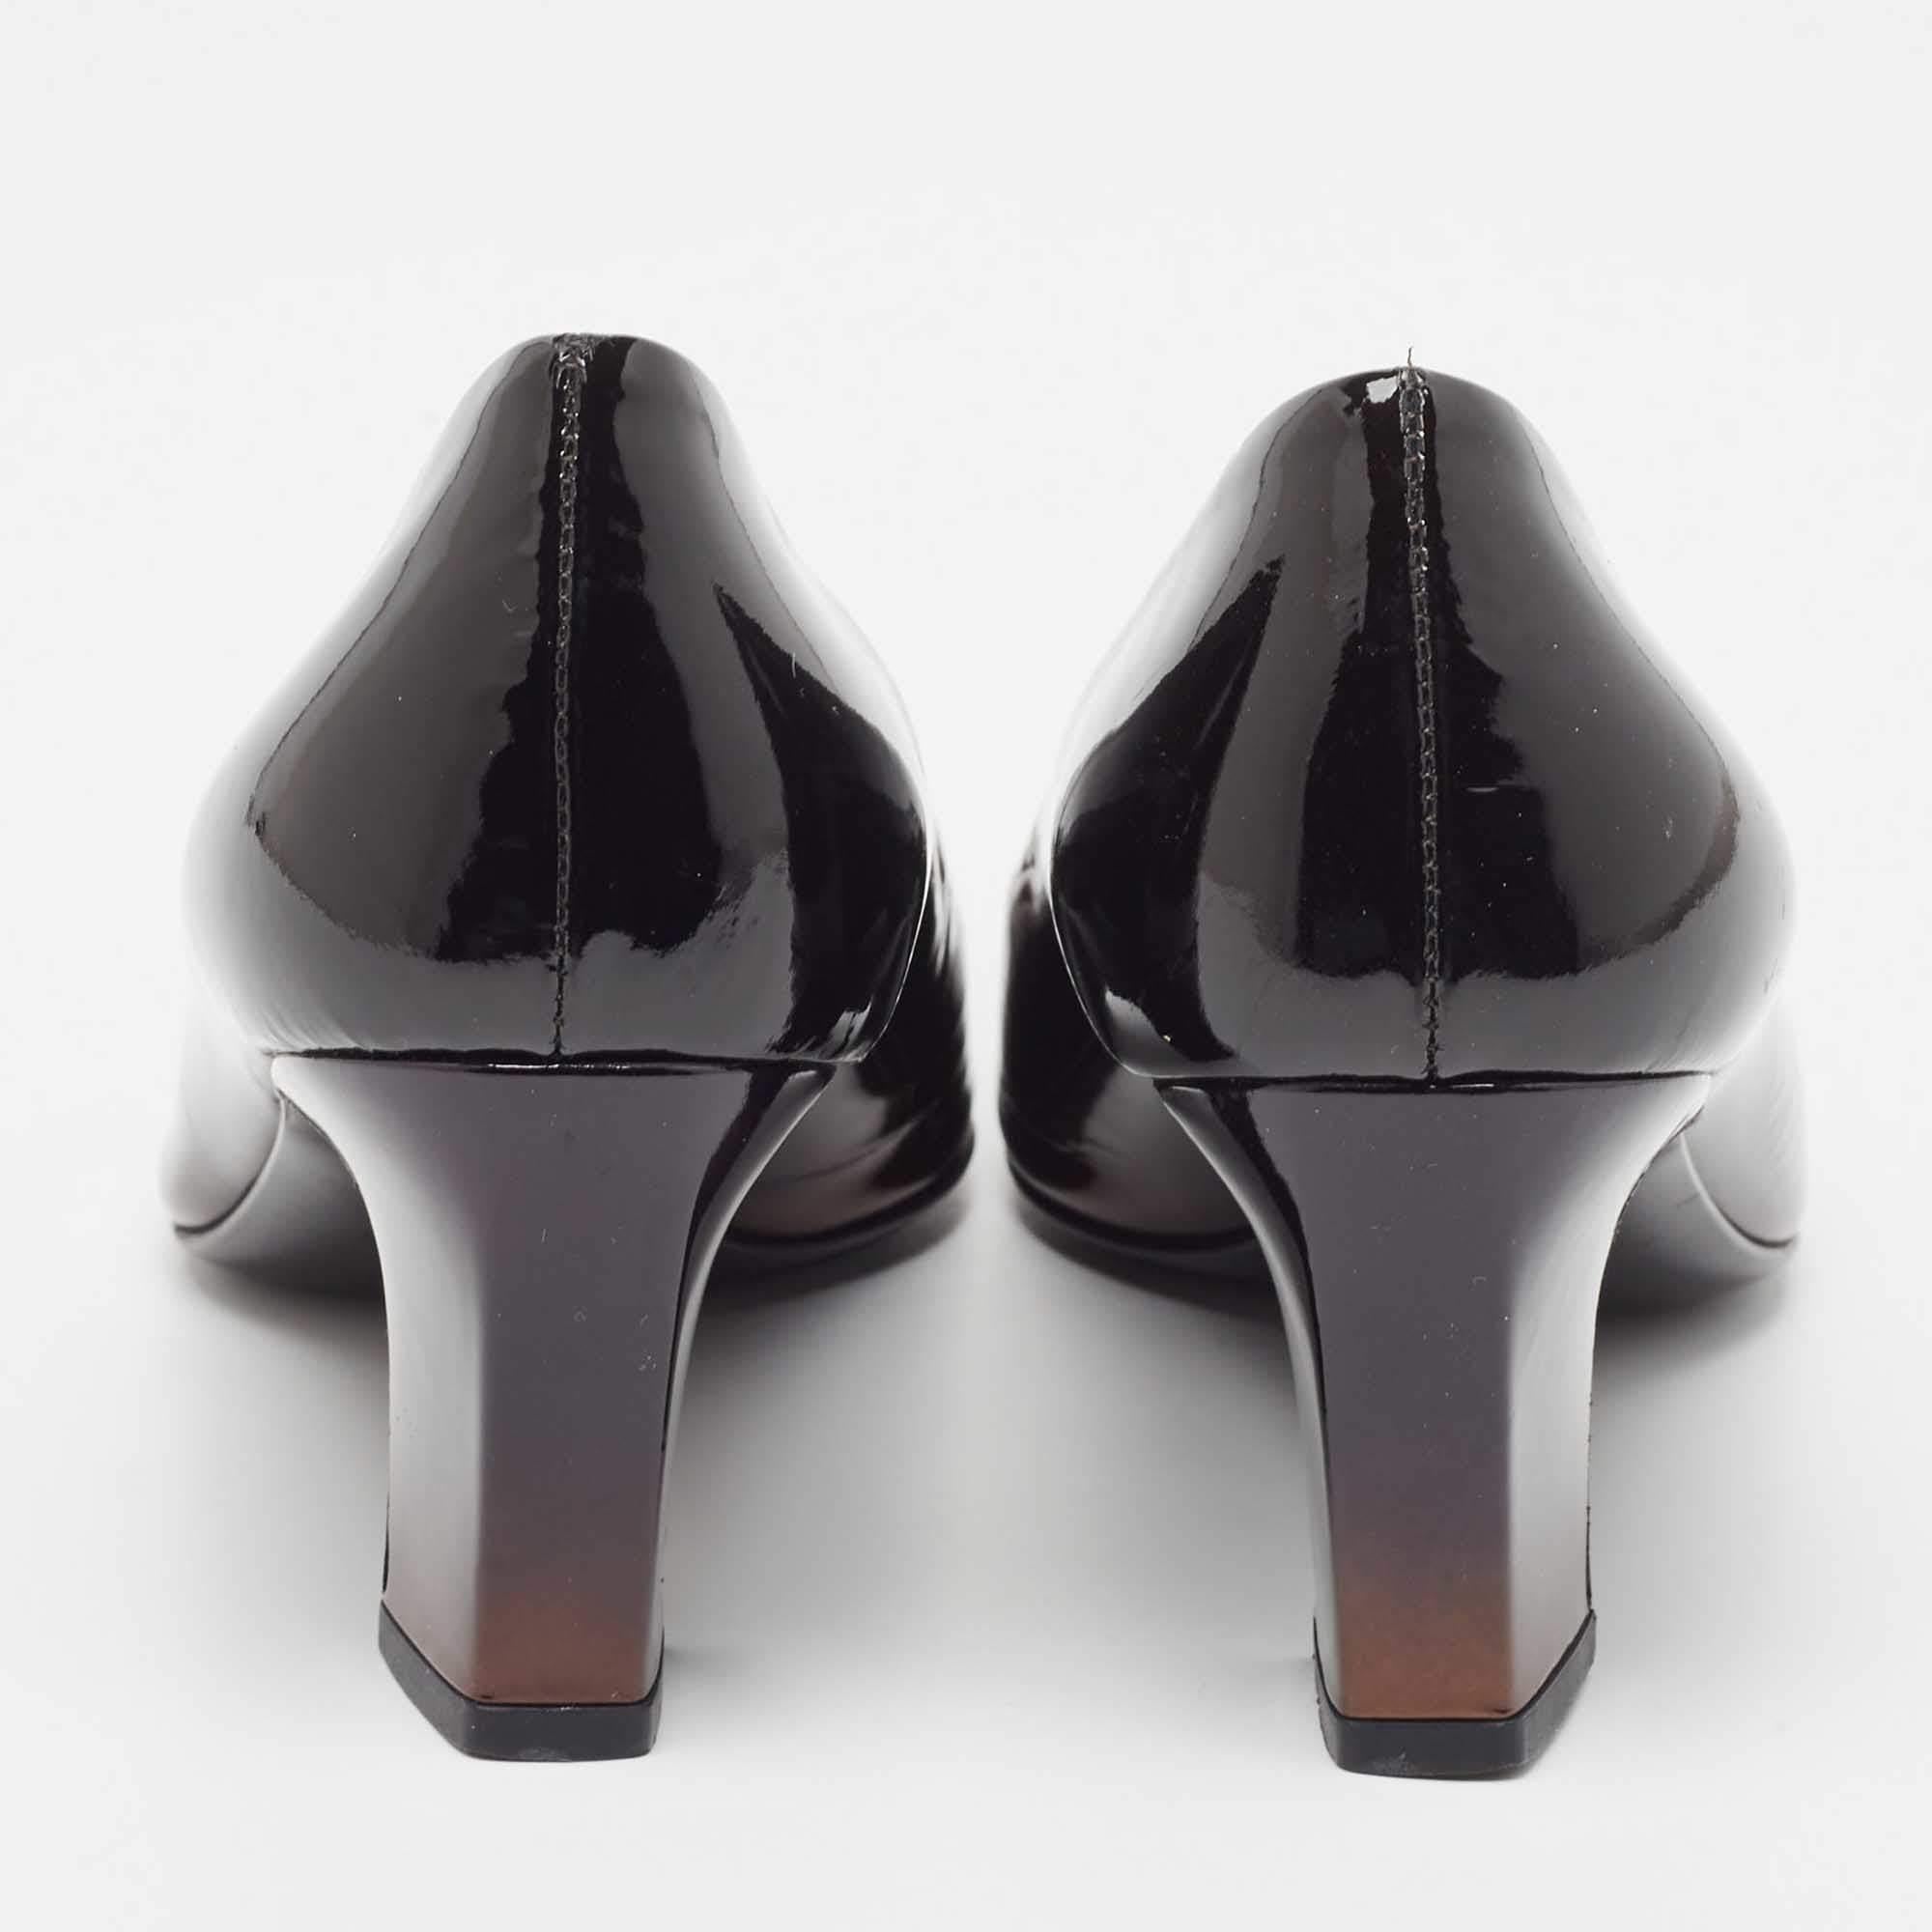 Prada Ombre Black/Brown Patent Leather Square Toe Pumps Size 37.5 4